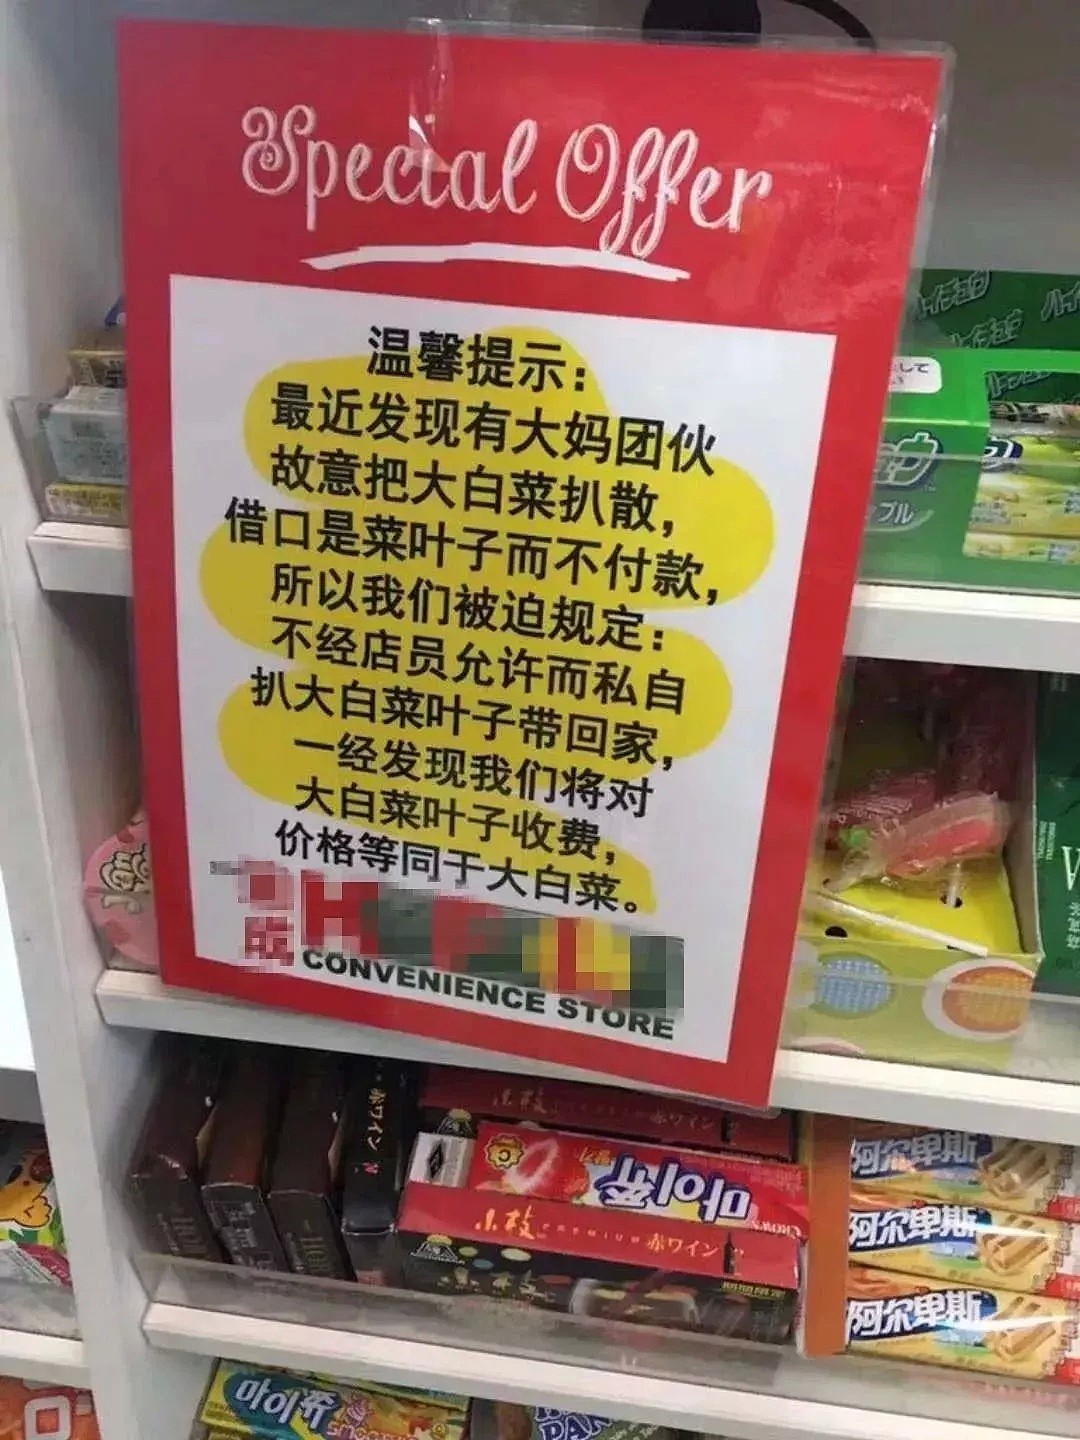 Costco又被占便宜！中国大姐装3大袋免费冰块！摔坏产品、吃剩的西瓜也被拿去退货，网友大呼：“丢人现眼！” - 16